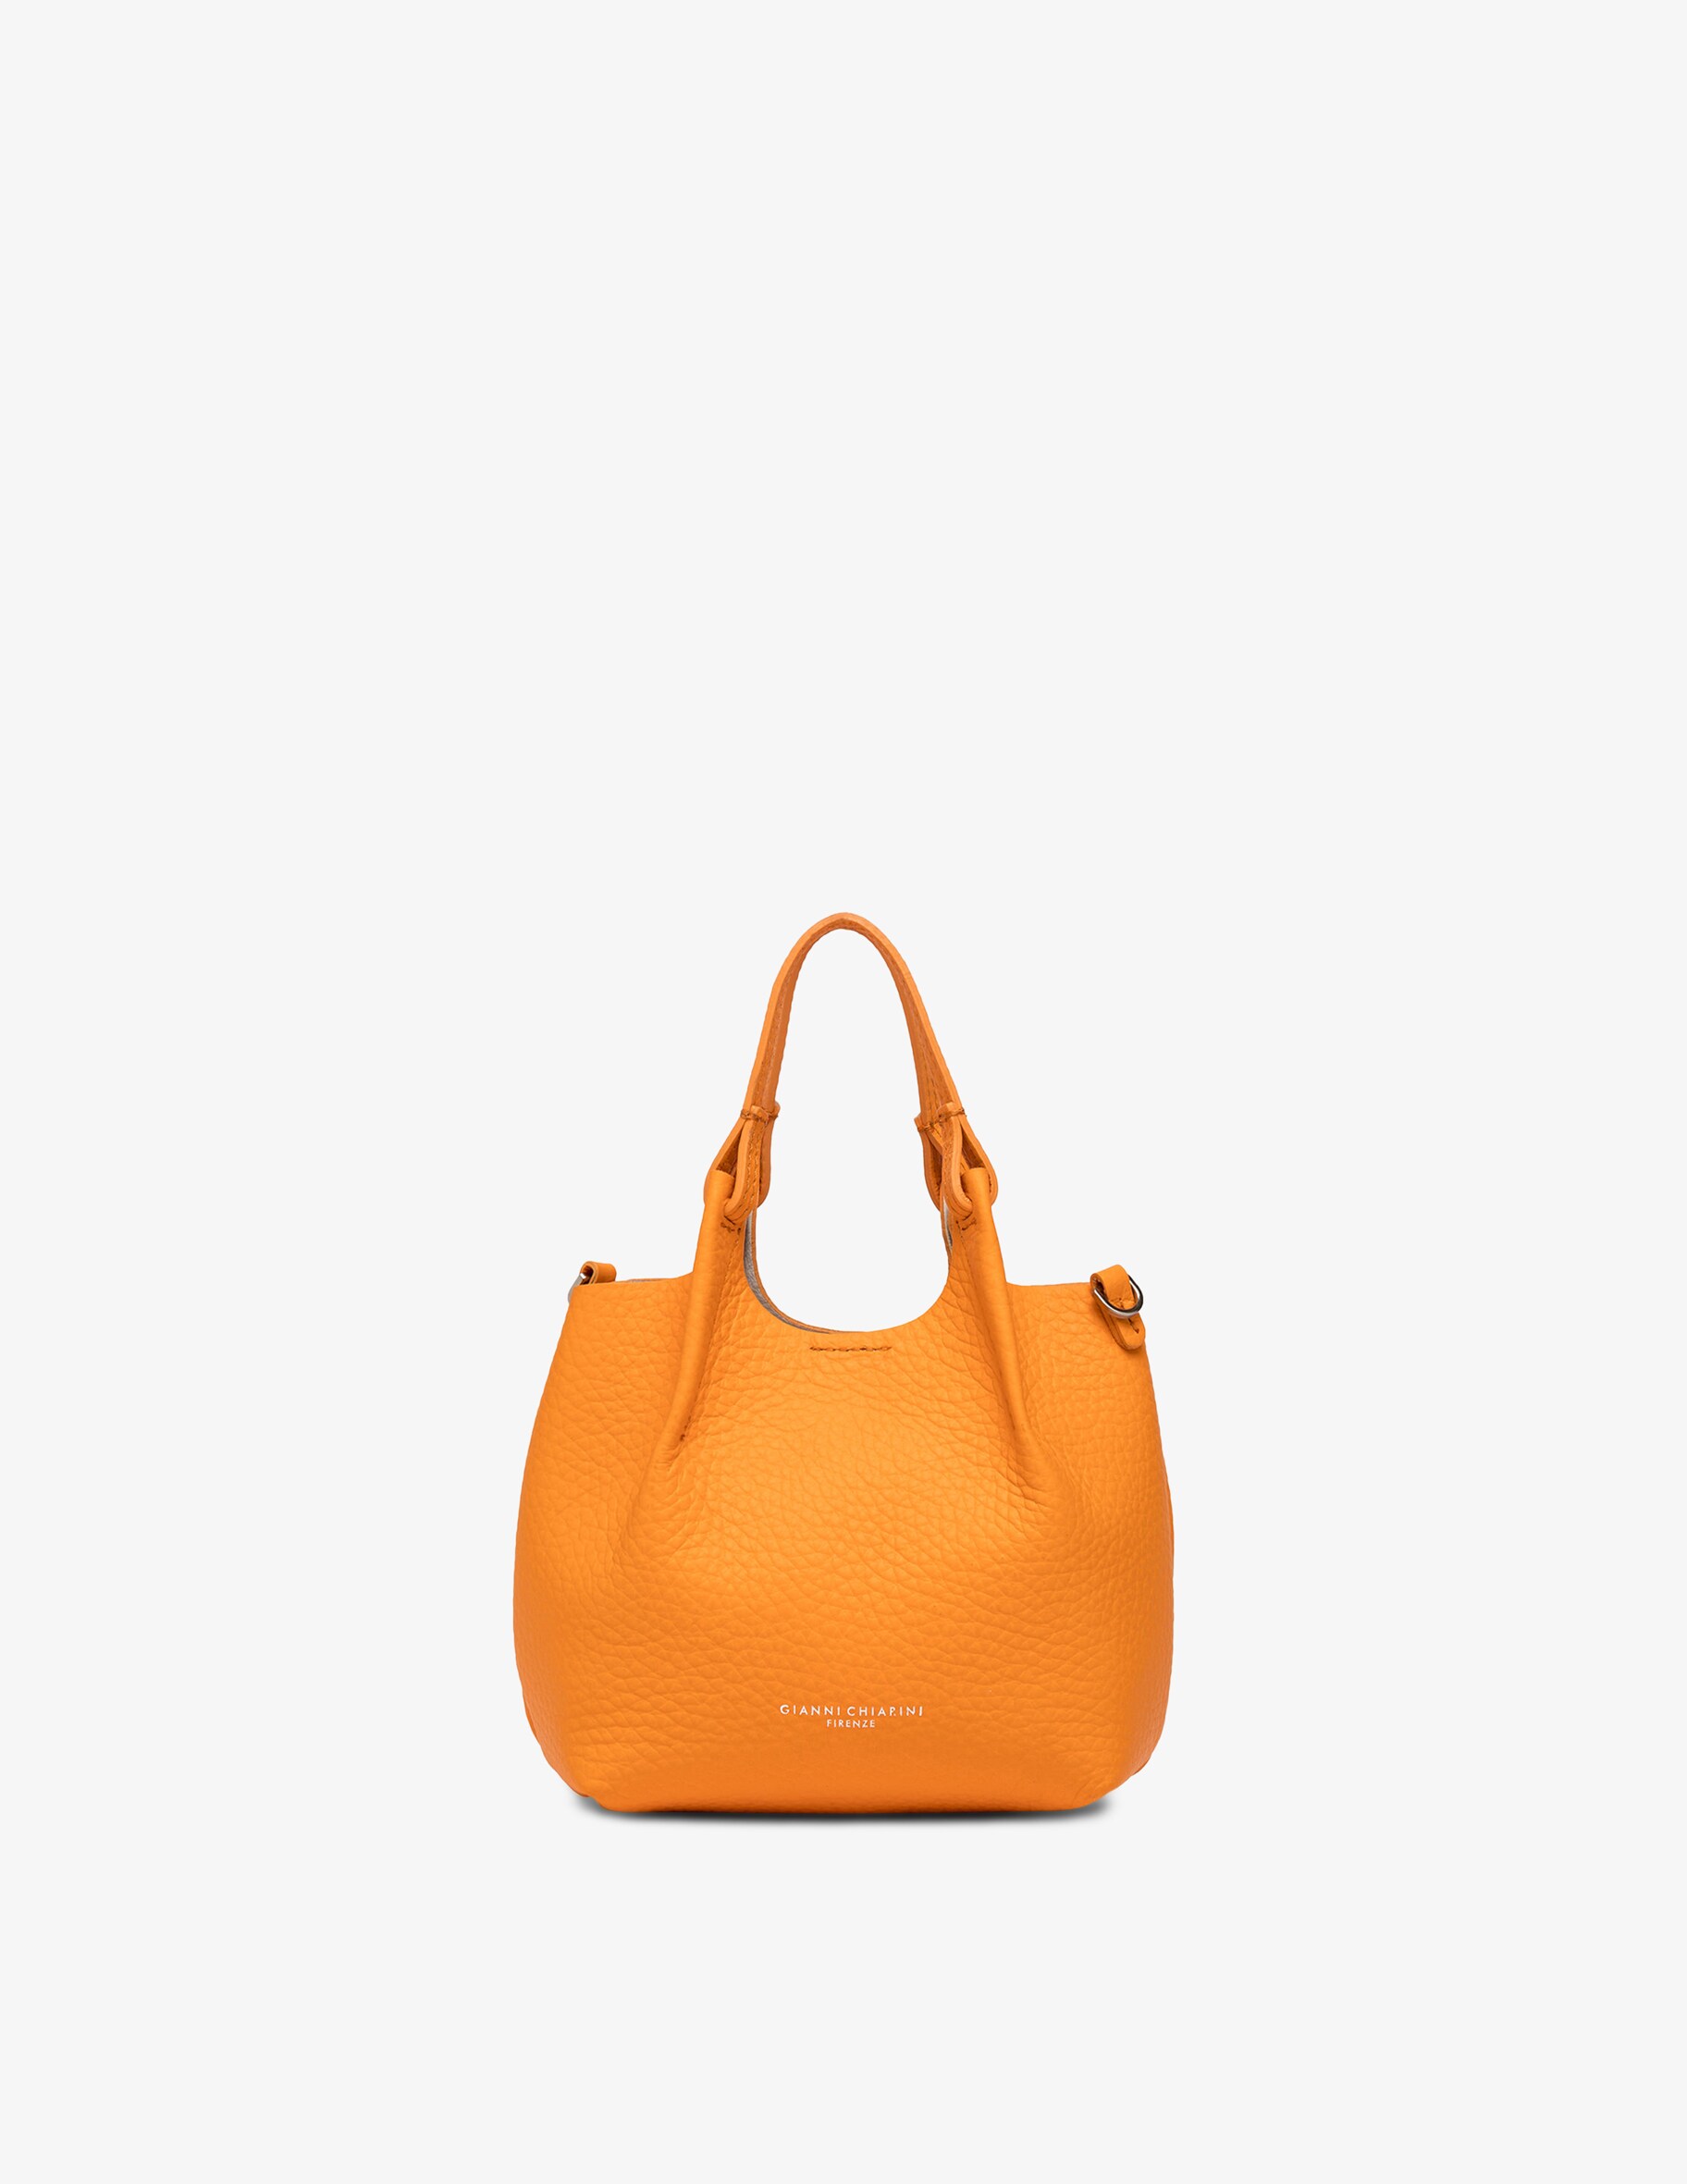 Миниатюрная сумка через плечо Dua Gianni Chiarini Firenze, оранжевый